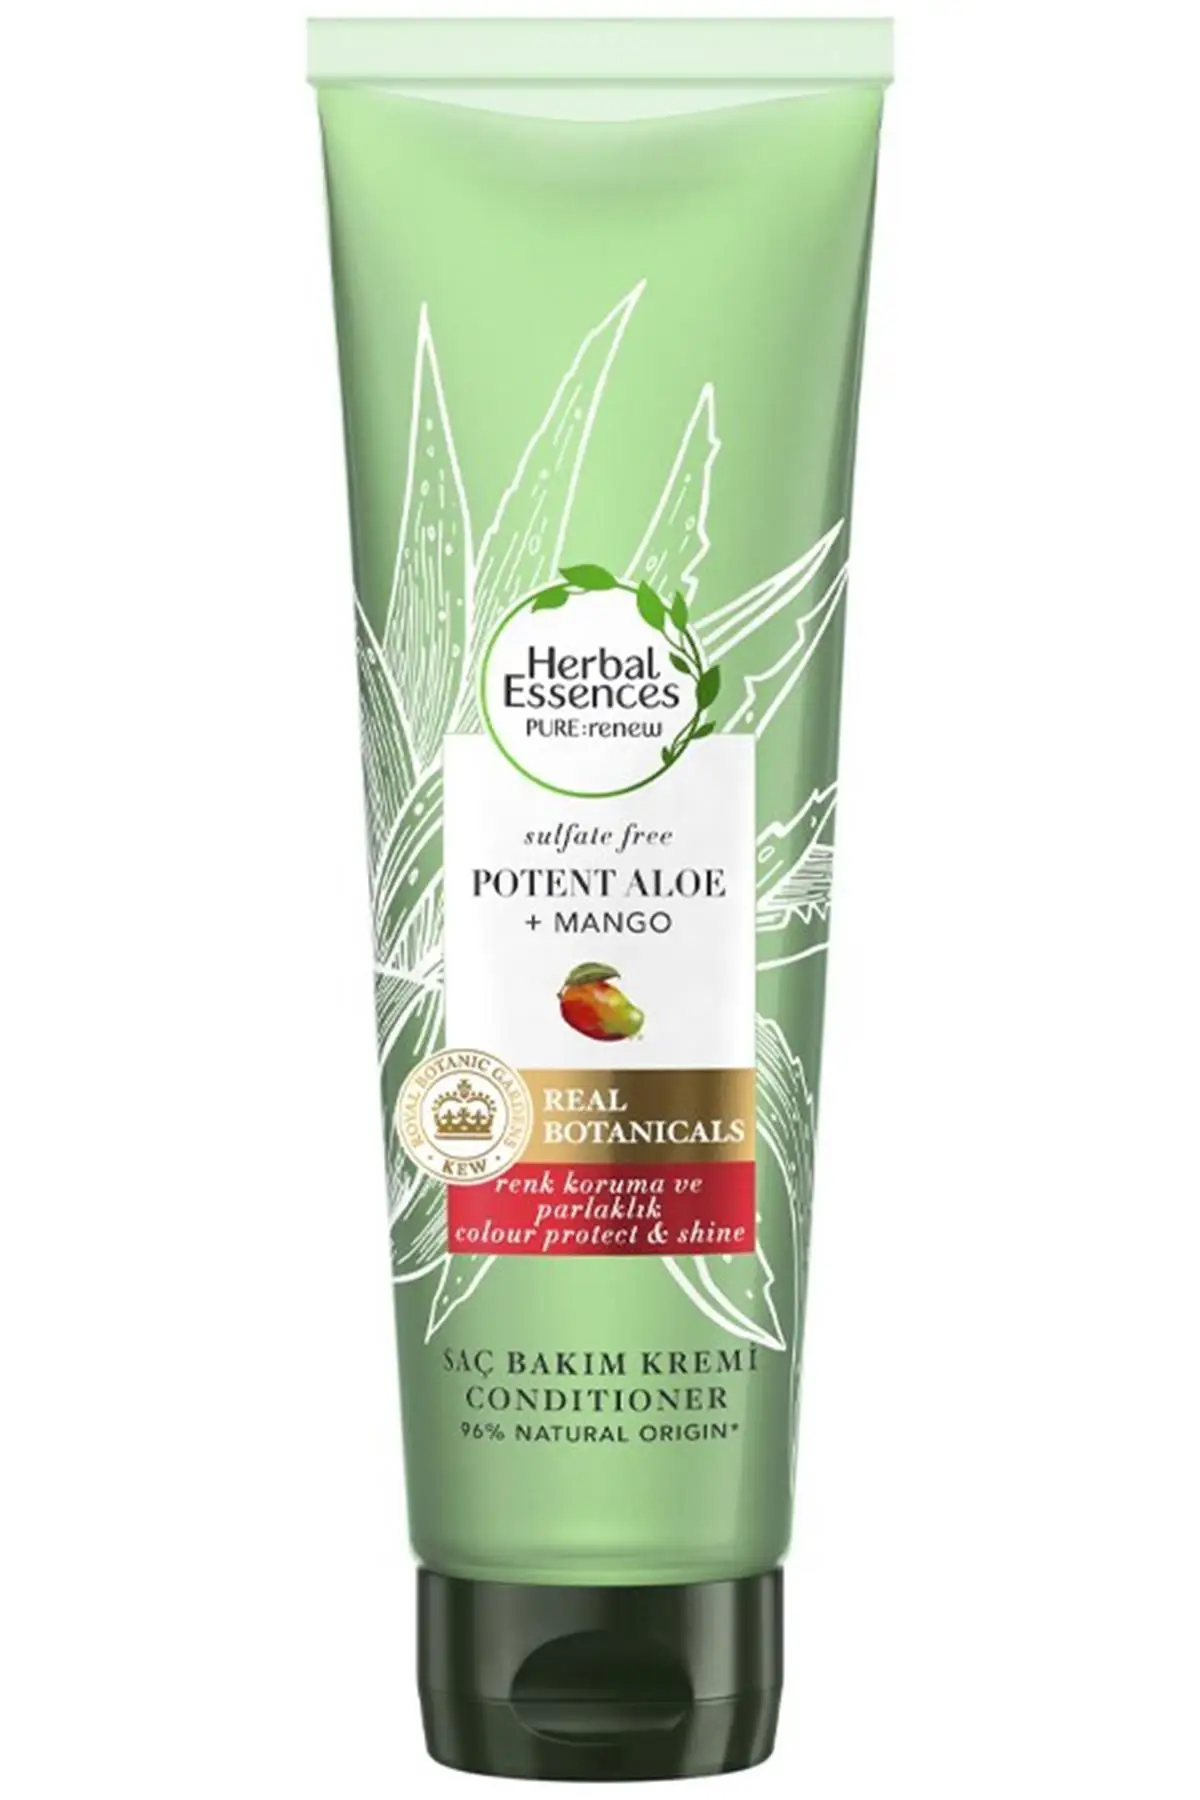 

Brand: Herbal Essences Pure:renew Mango Hair Care Cream 275 ml Category: Hair Conditioner